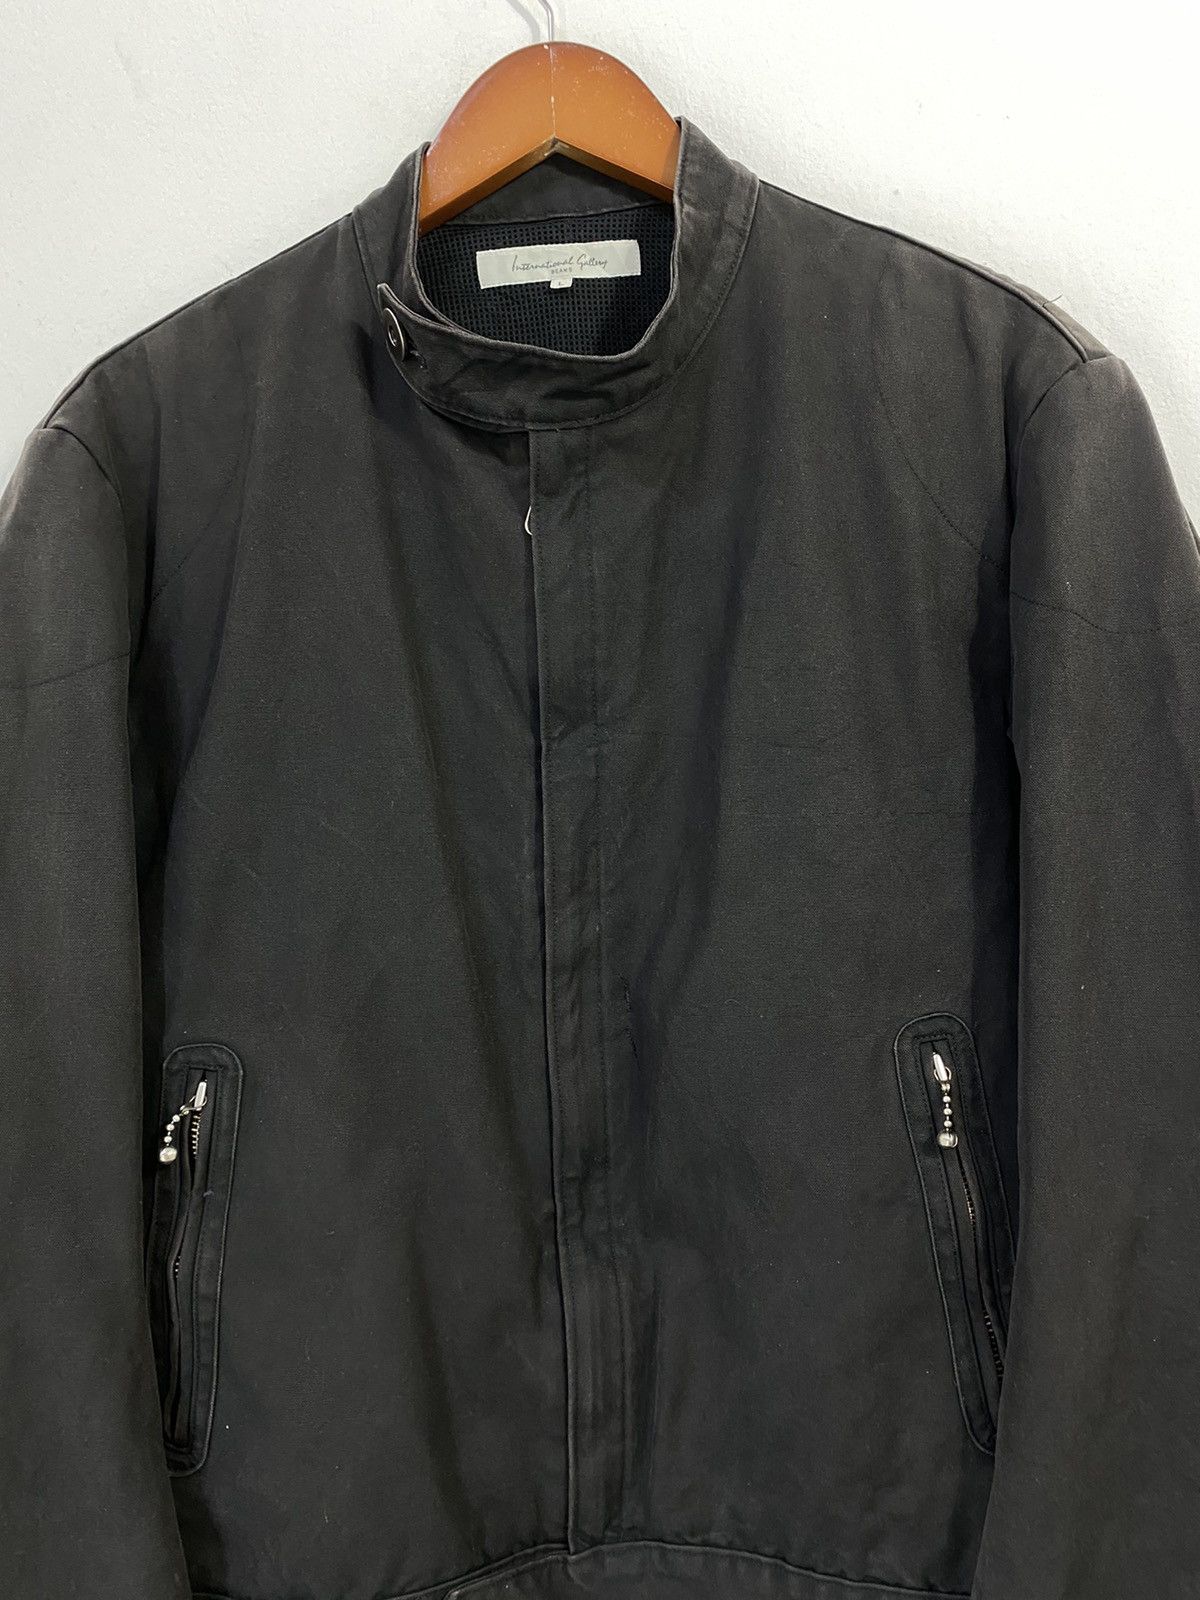 Beams International Gallery Biker Jacket Design Black Color - 4